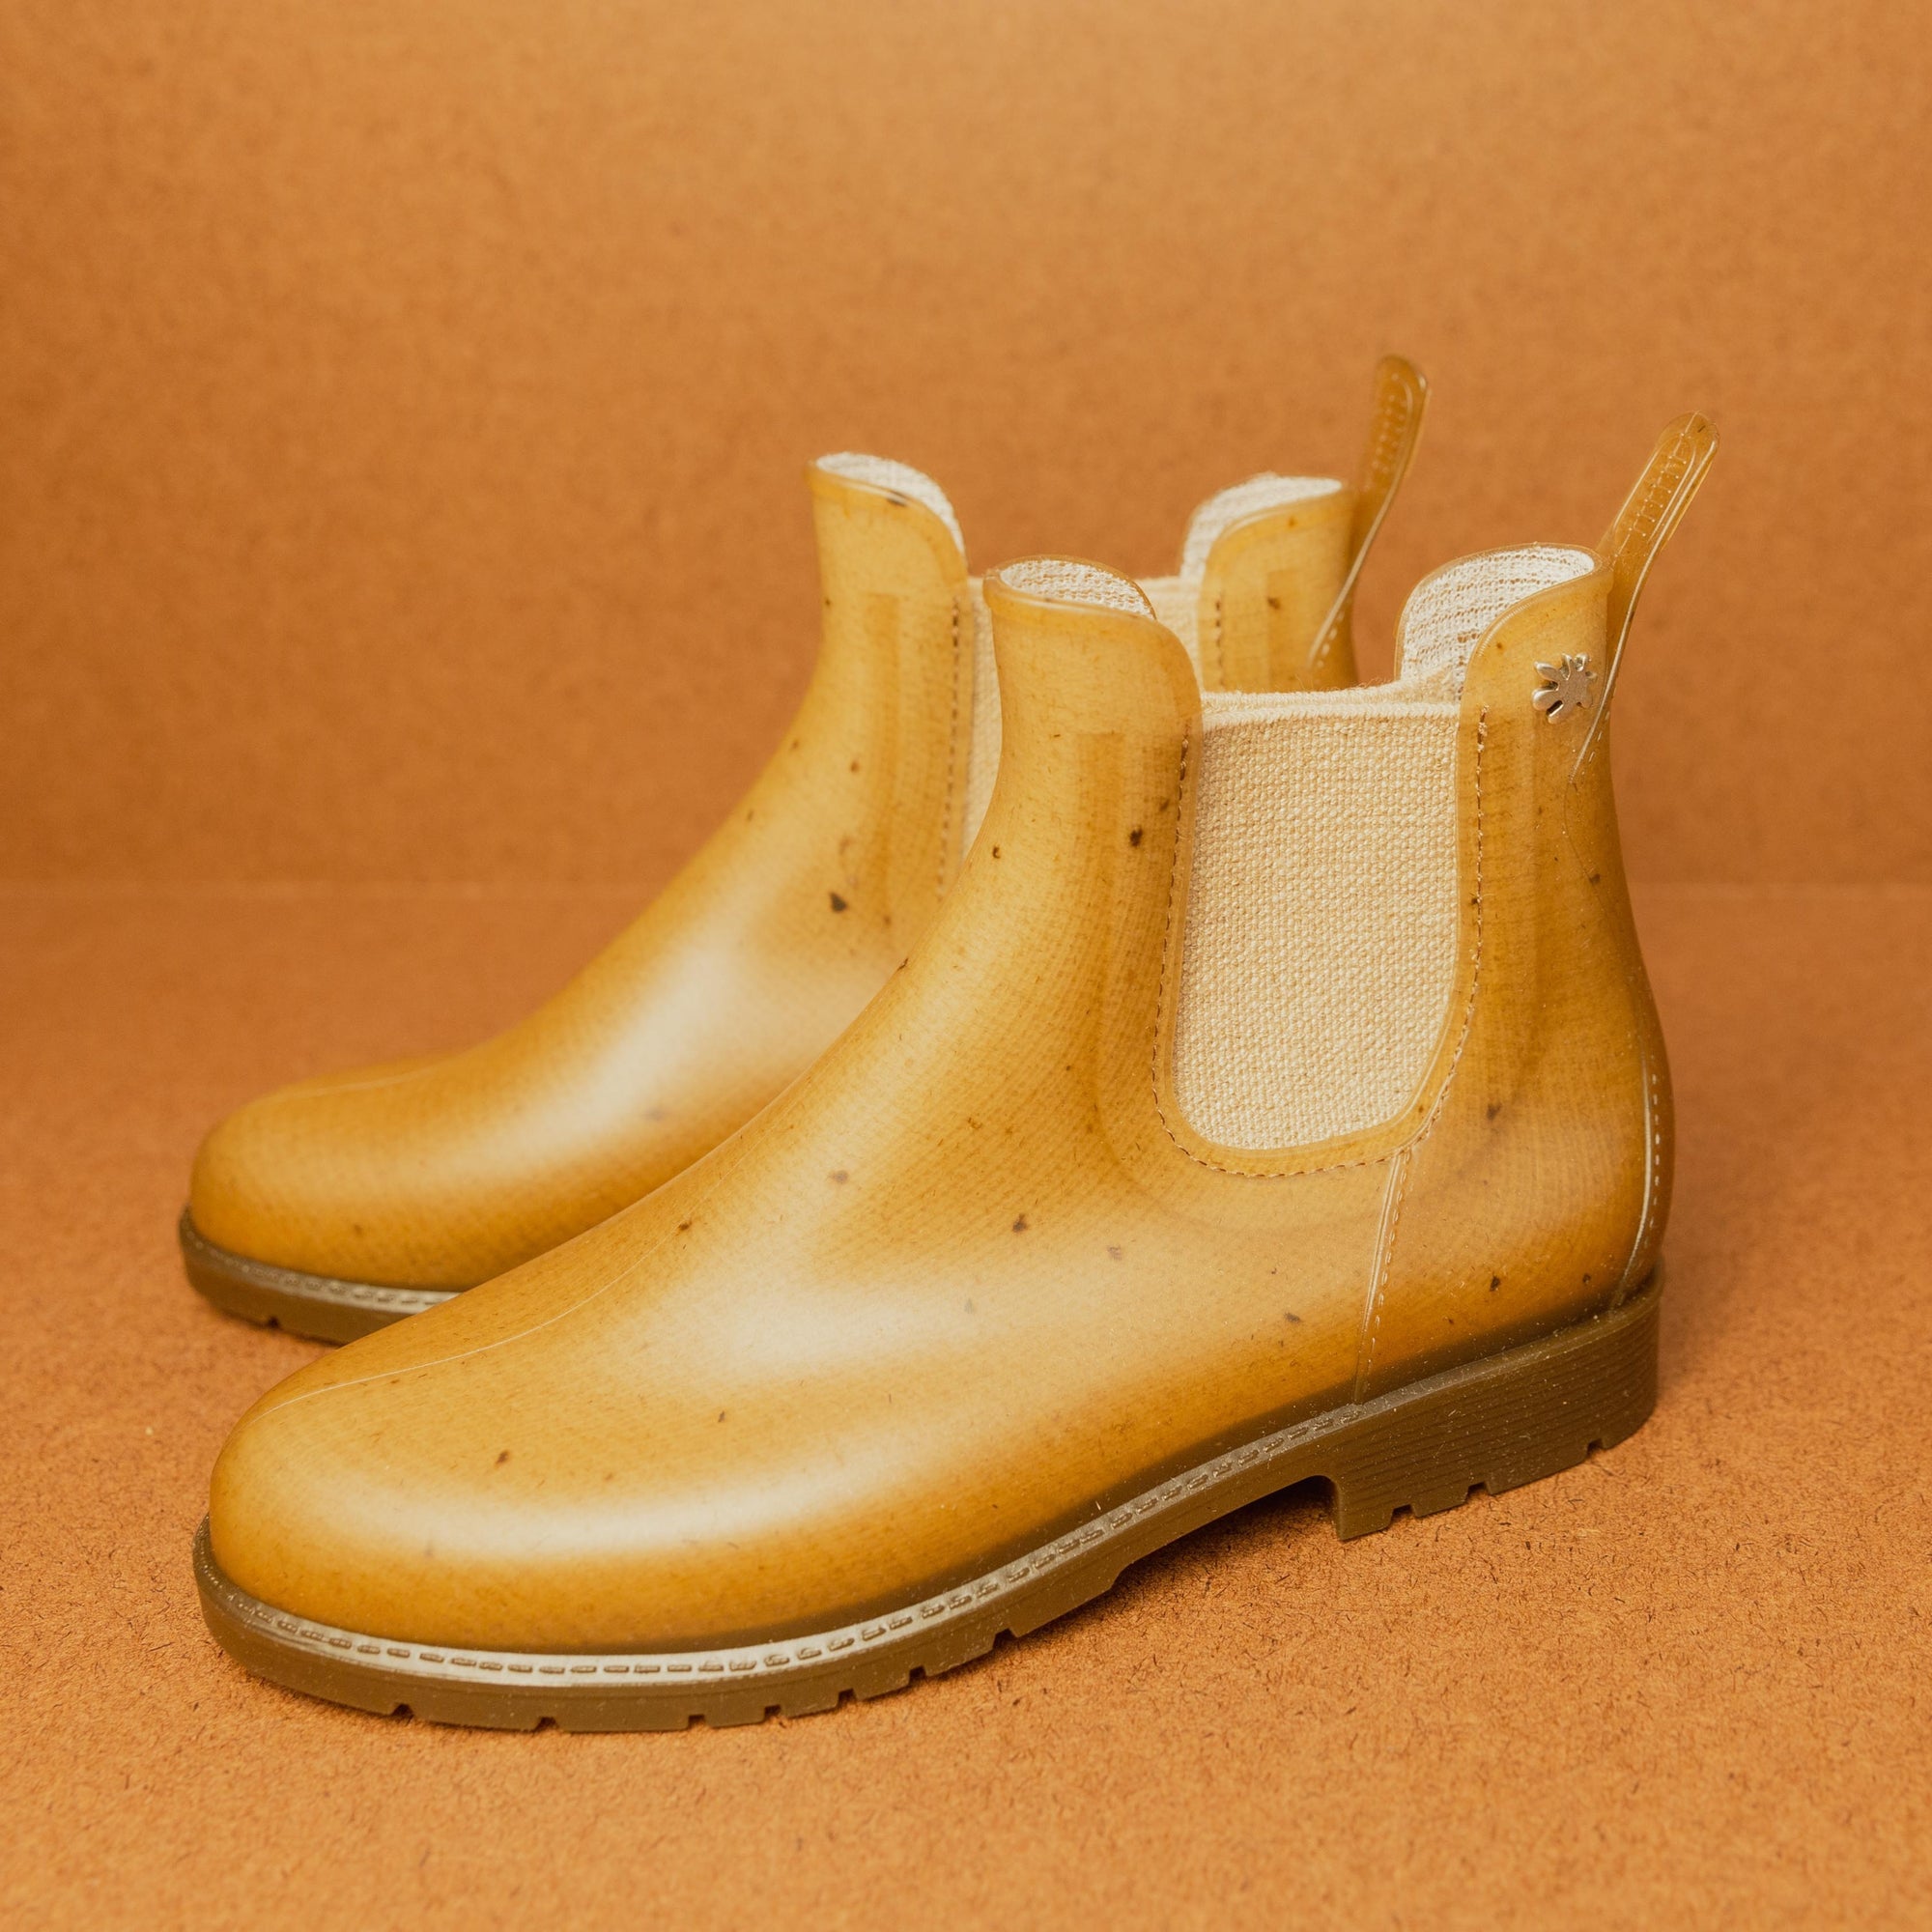 Plasticana Chelsea Rain Boot - Cream left side